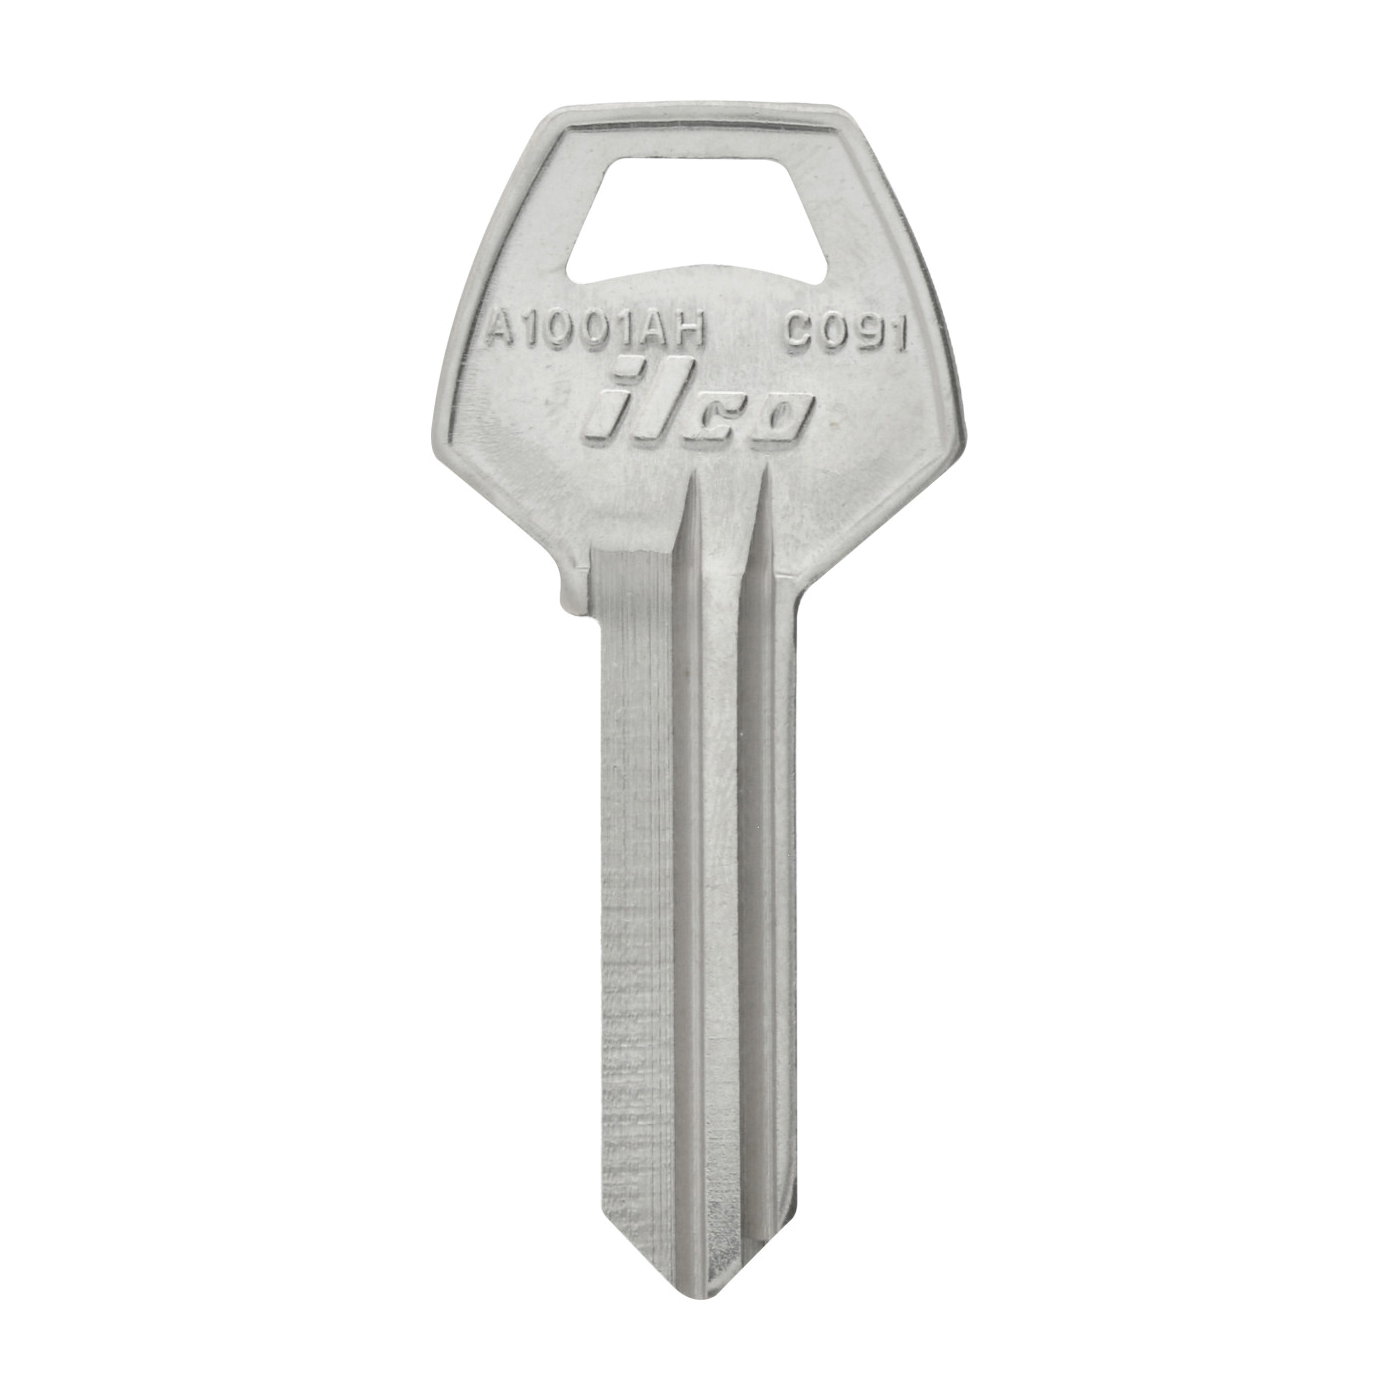 441840 Key Blank, Brass, Nickel-Plated, For: Corbin Locks